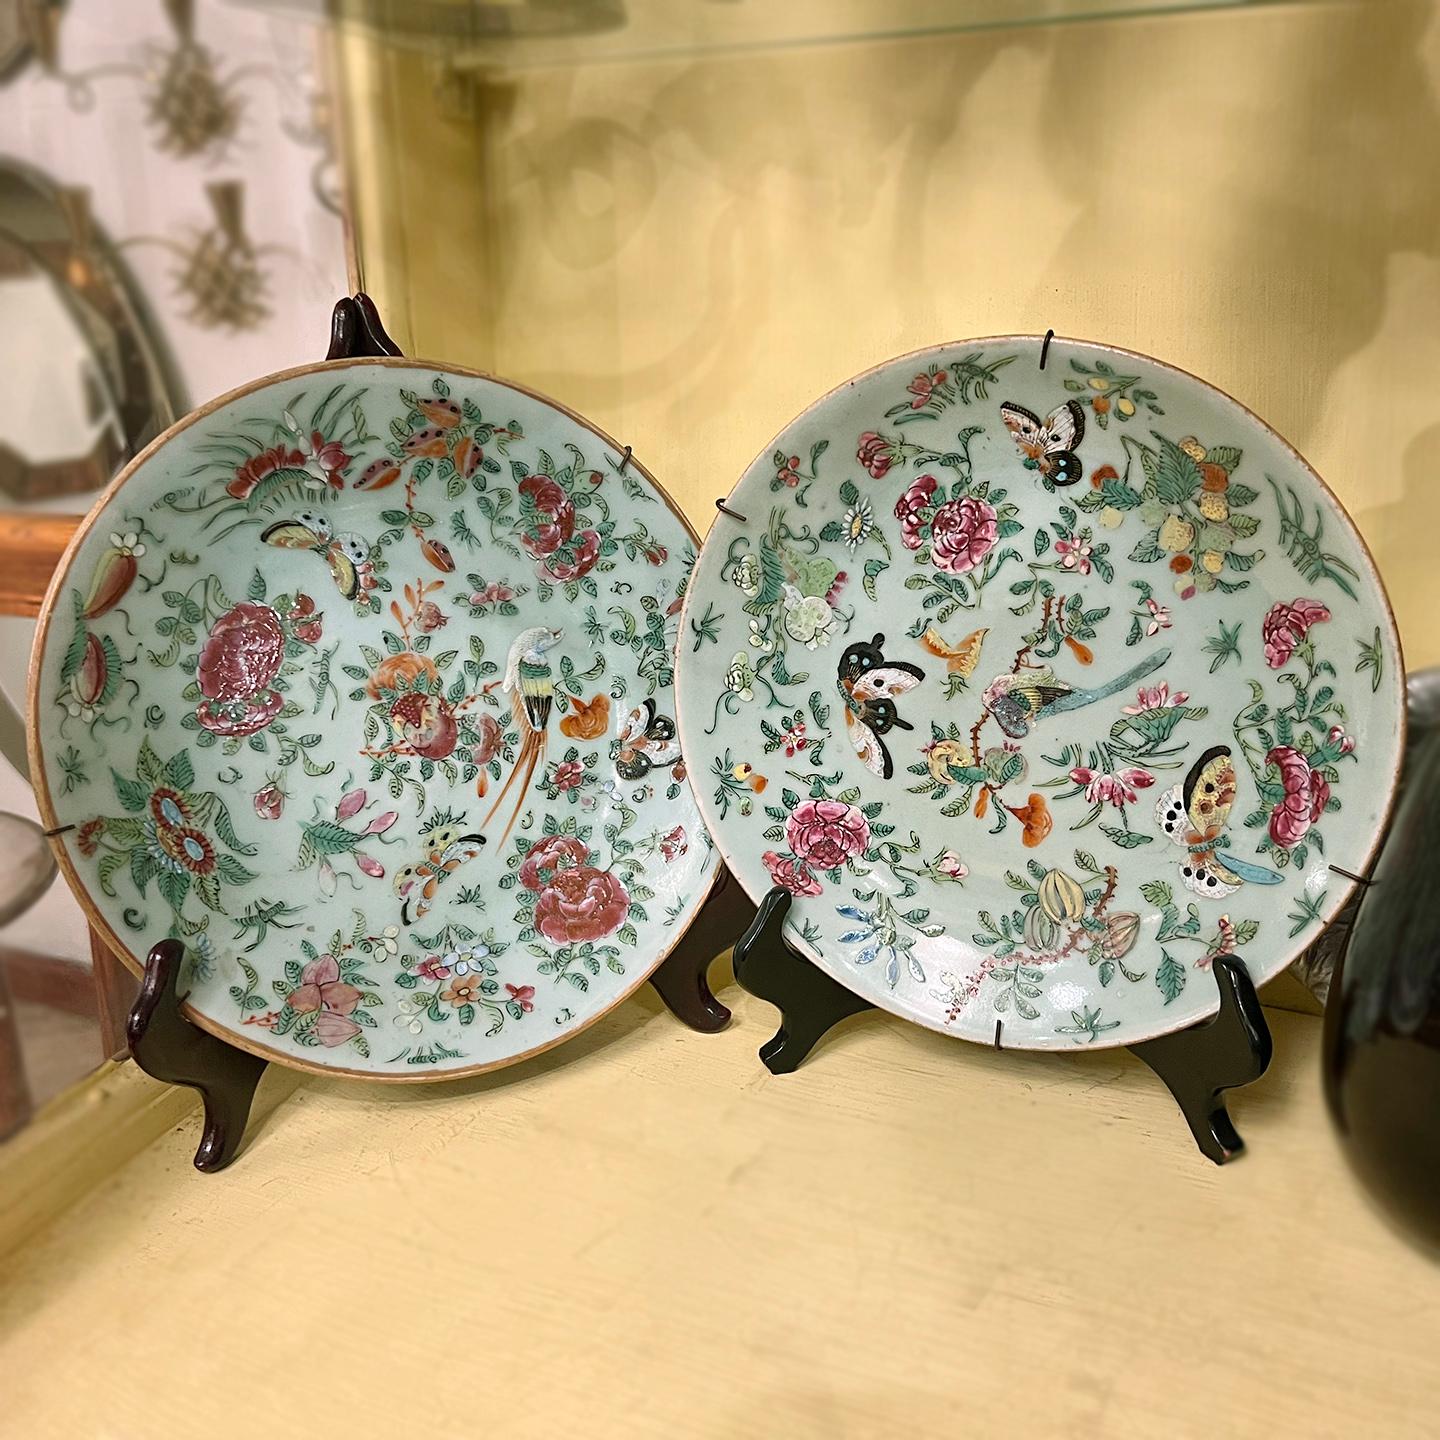 Pair of 19th century Chinese celadon porcelain hand-painted decorative plates.

Measurements:
Diameter: 8.5